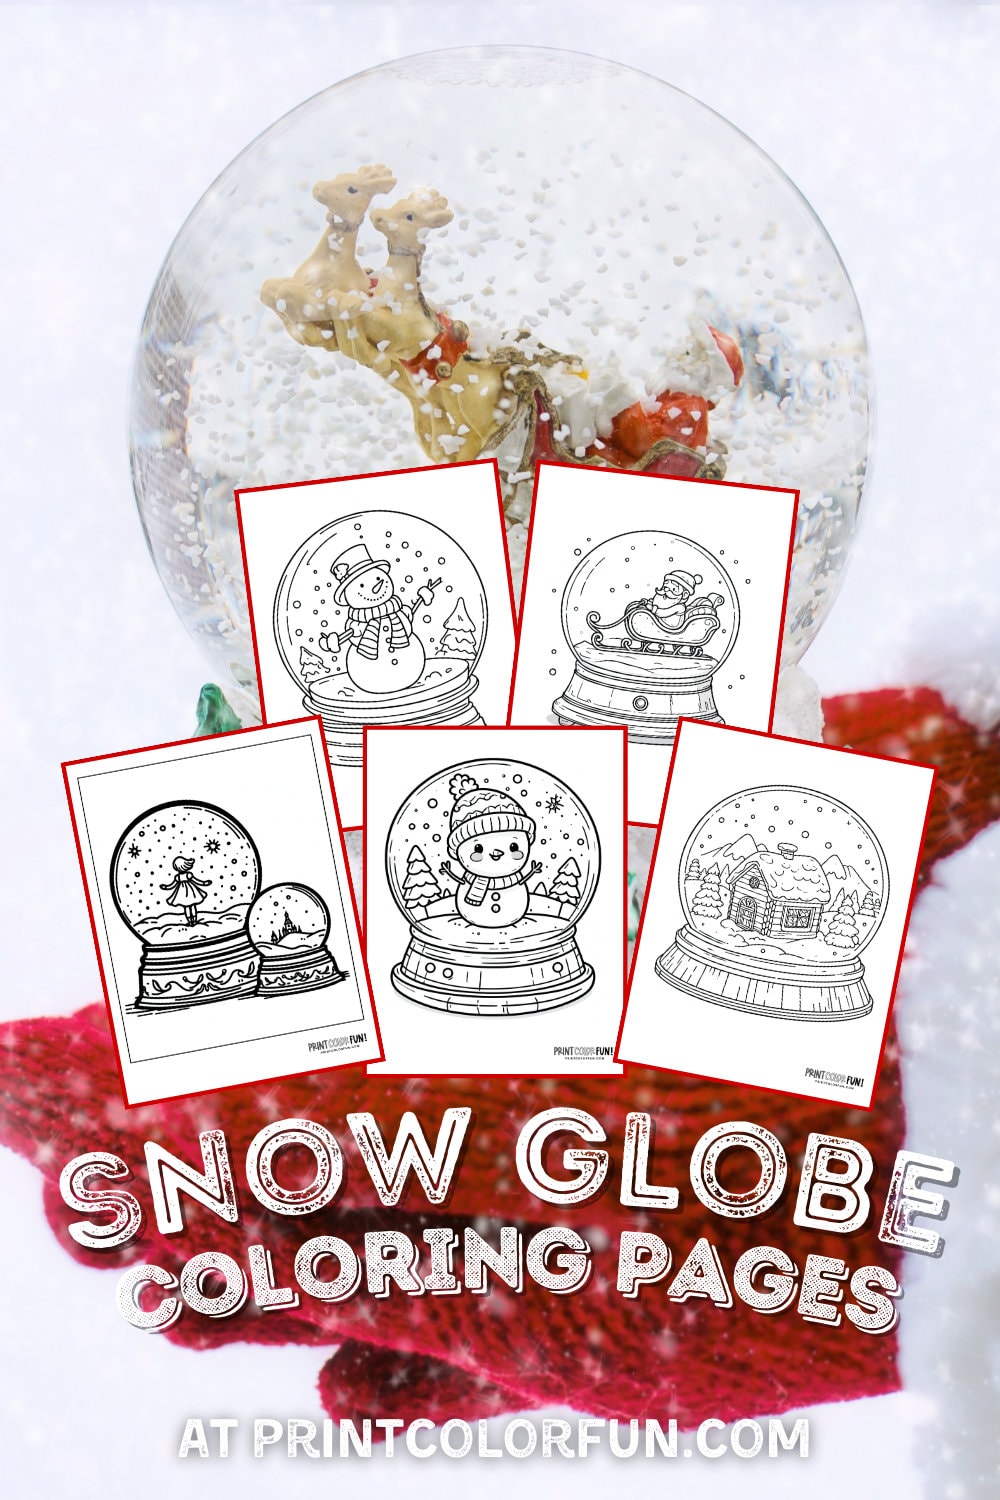 Snow globe coloring pages and Chrismas clipart - PrintColorFun com